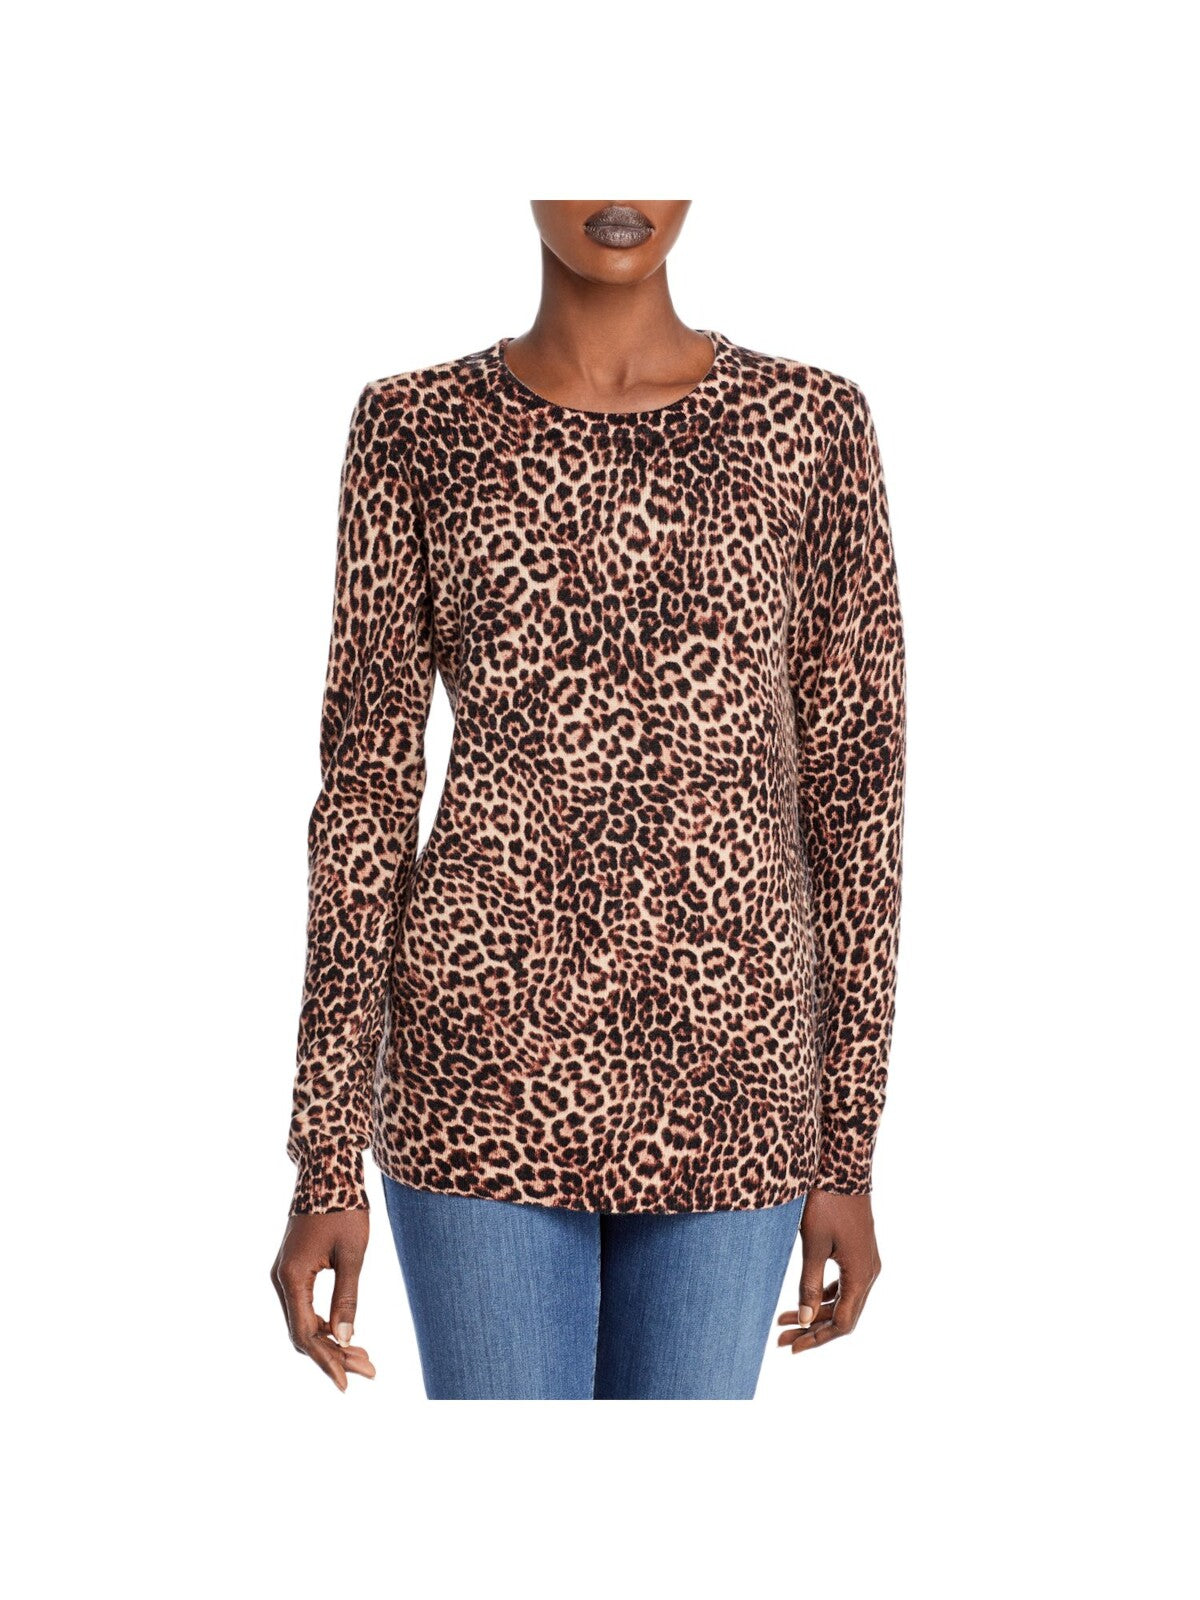 Designer Brand Womens Brown Cashmere Animal Print Long Sleeve Jewel Neck Wear To Work Sweater S